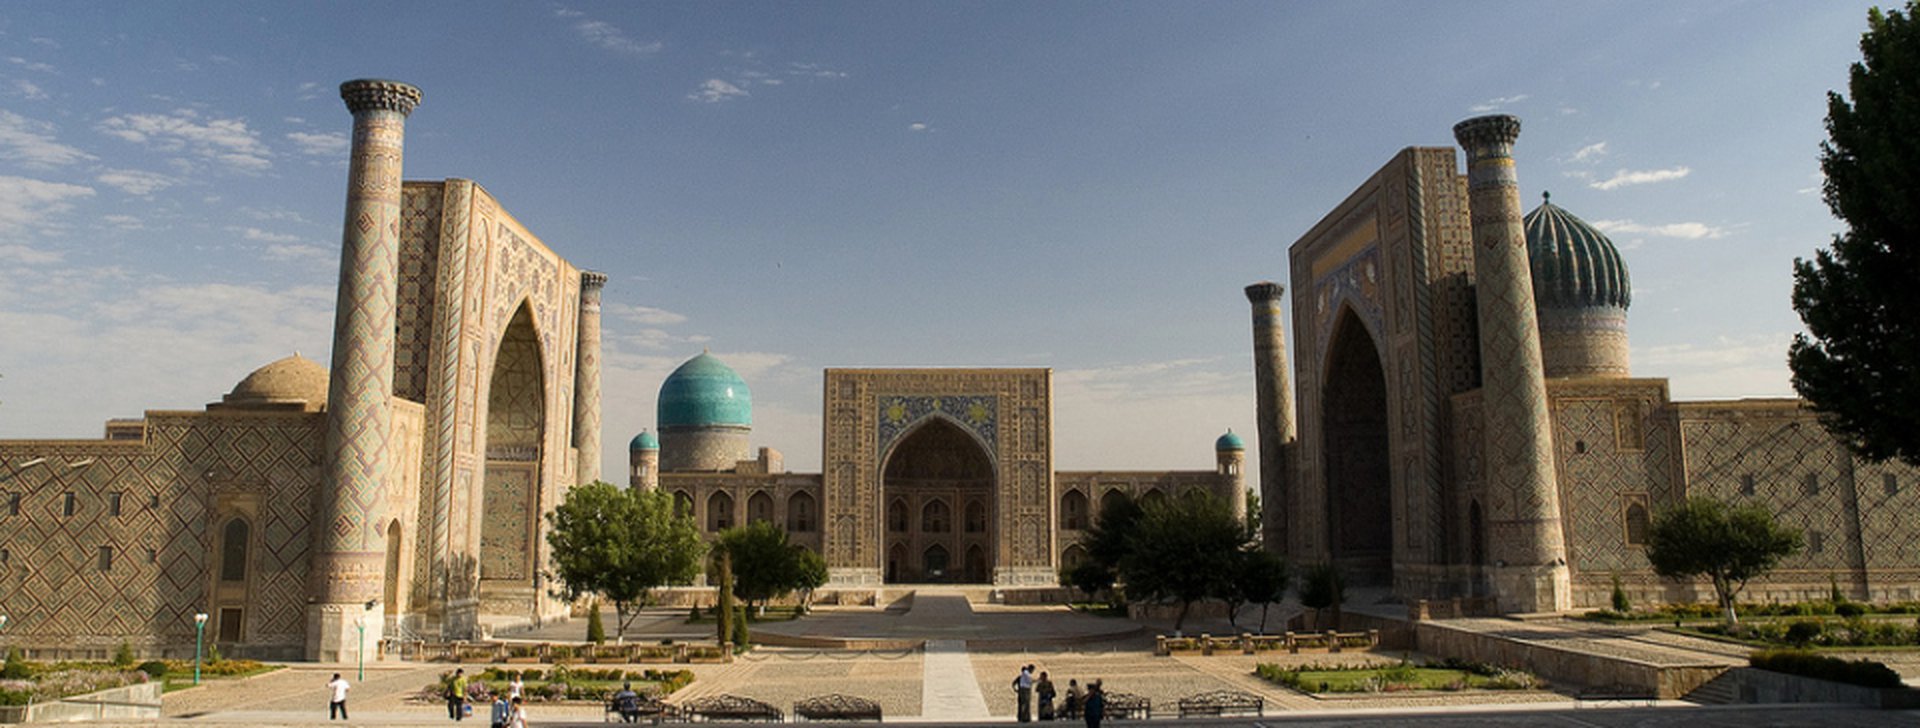 Reiseziele Zentralasien